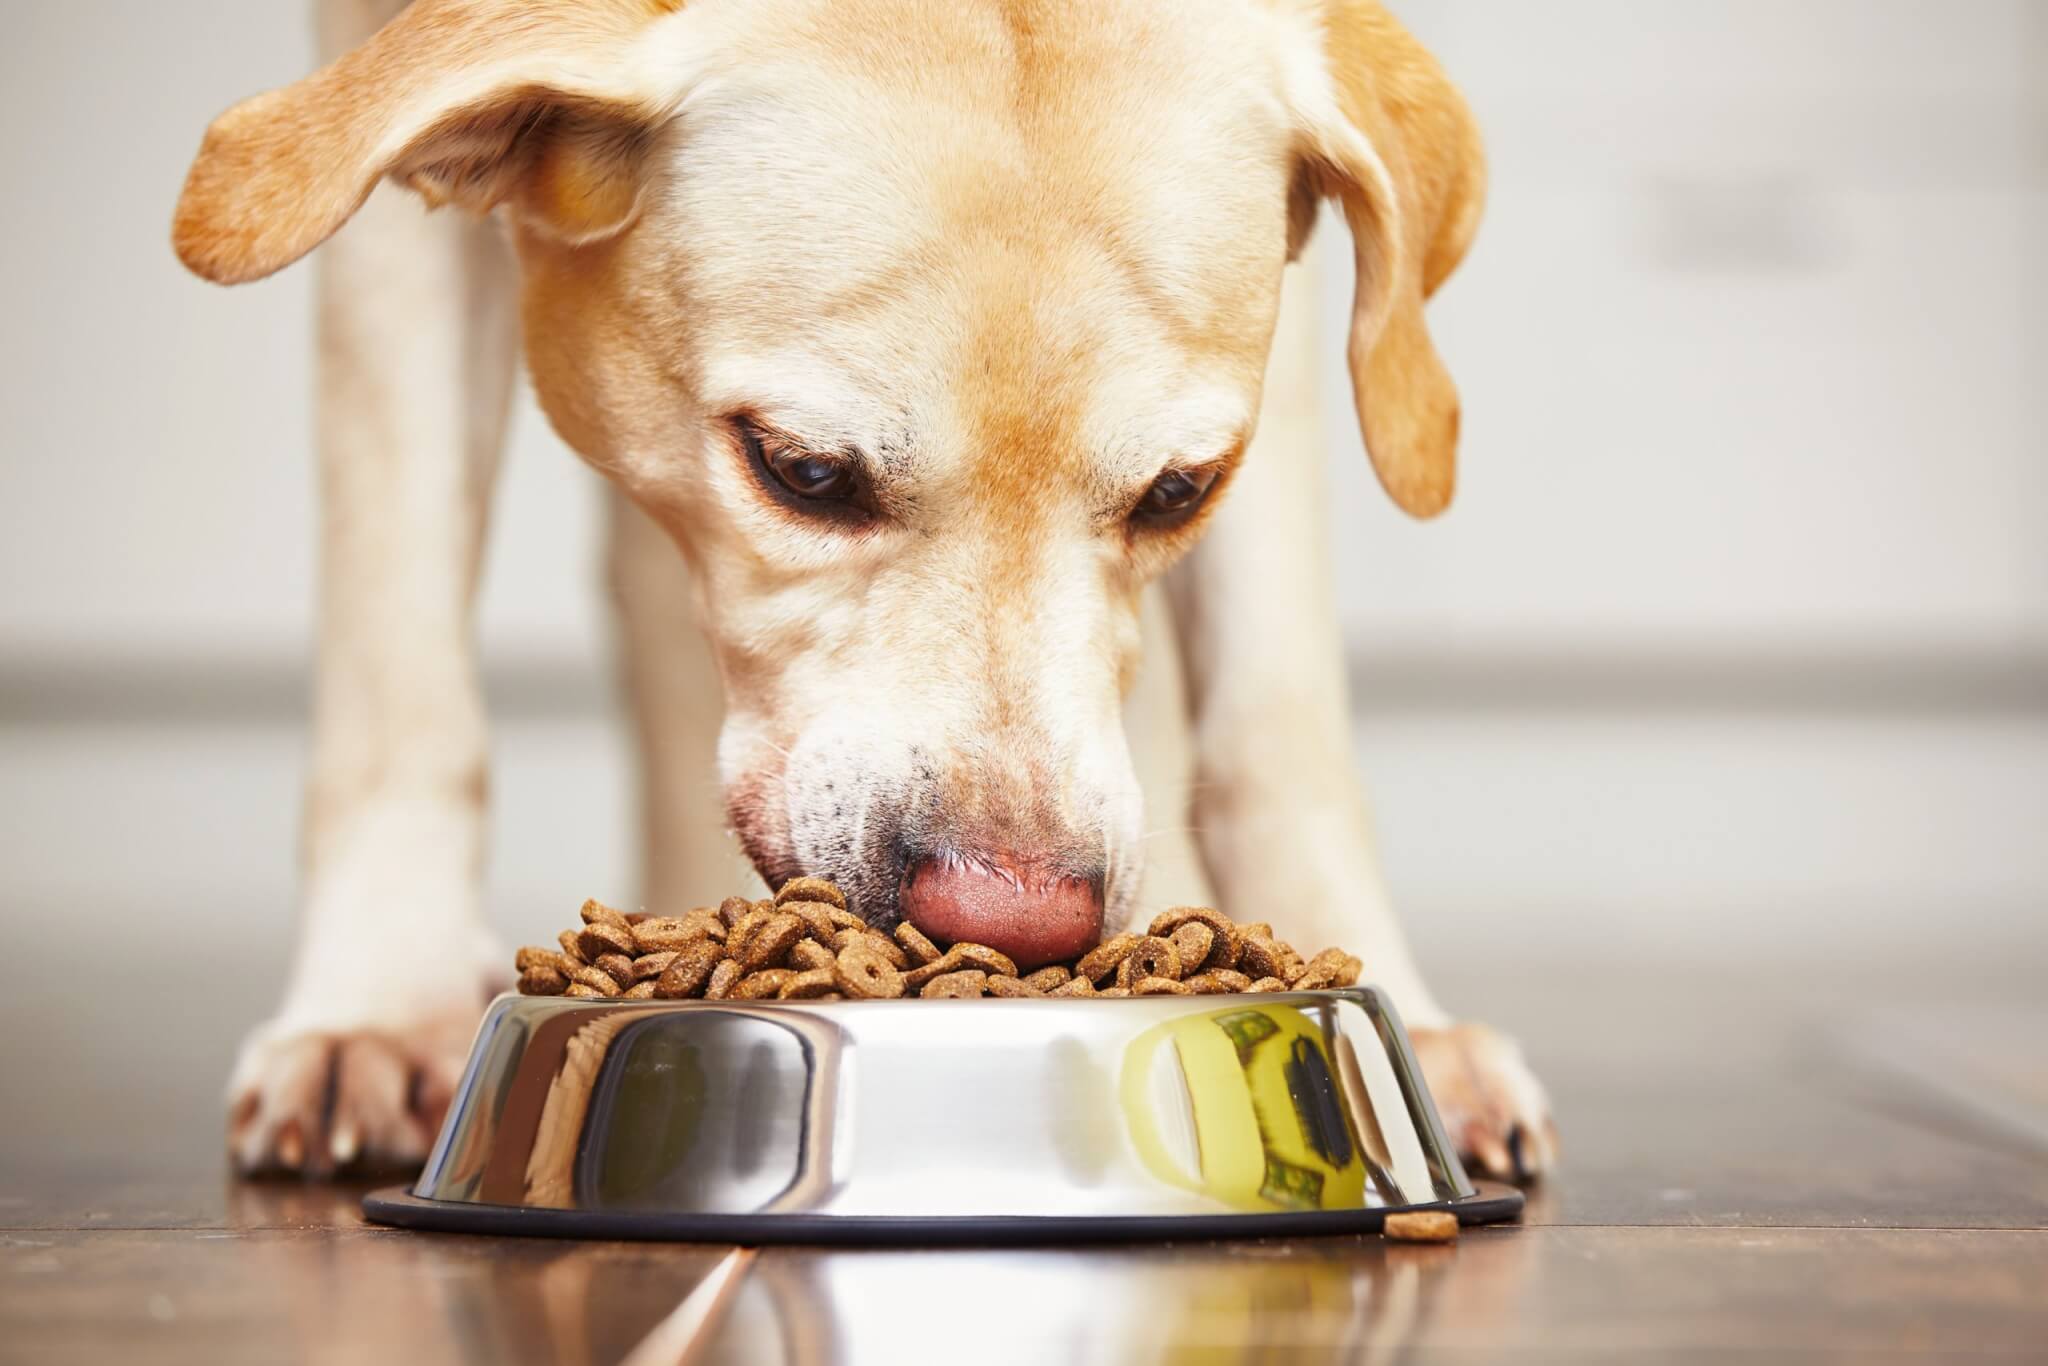 Dog eating bowl of food